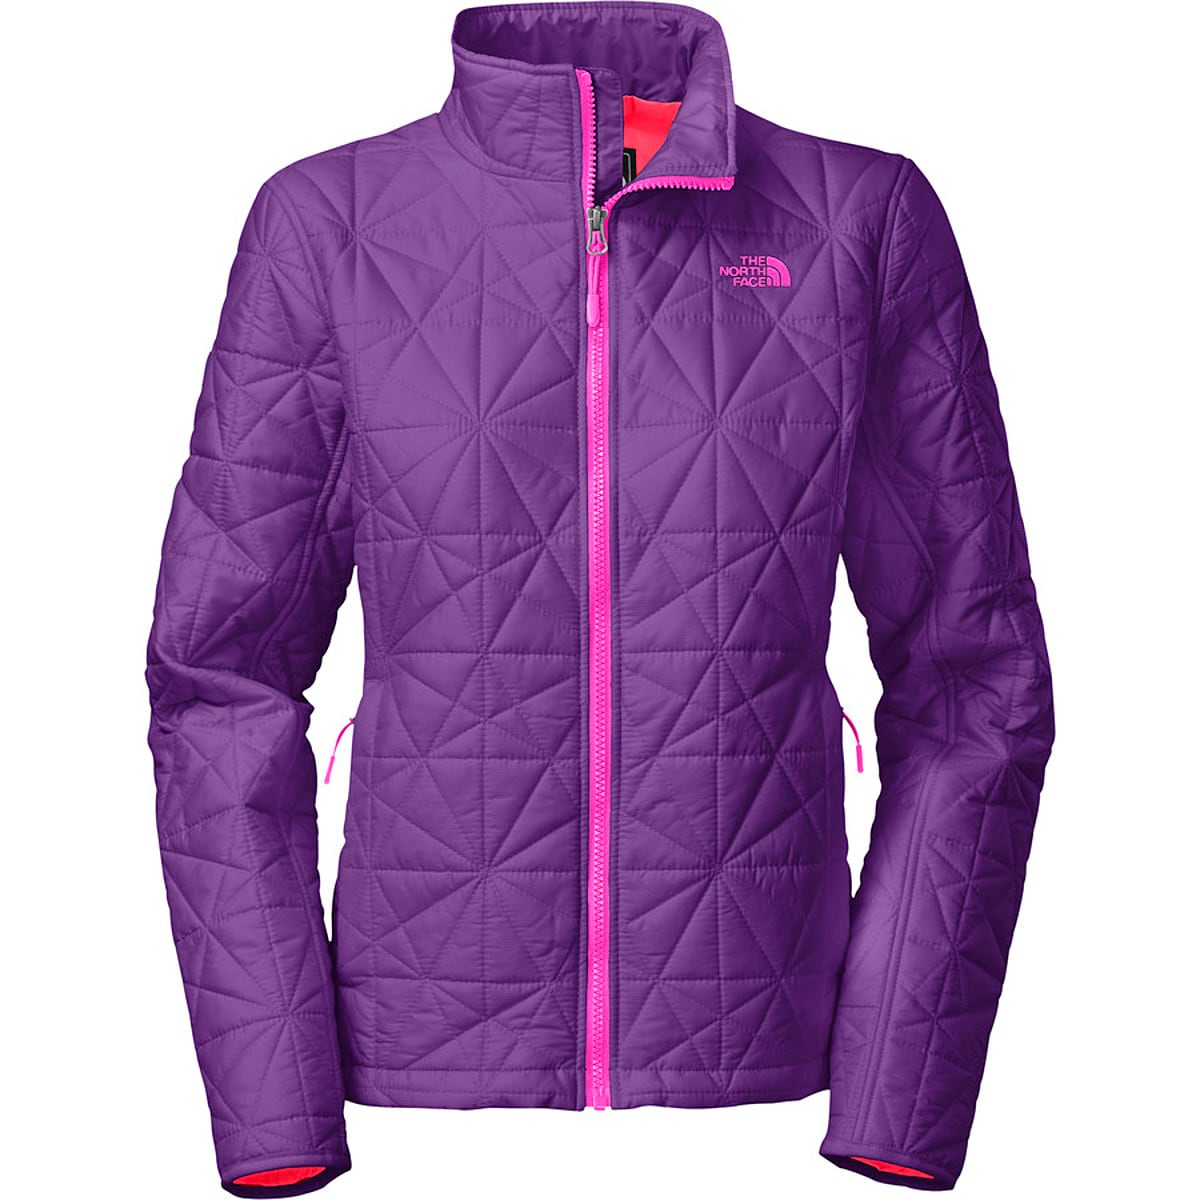 The North Face Tamburello Insulated Jacket - Women's Gravity Purple, XS